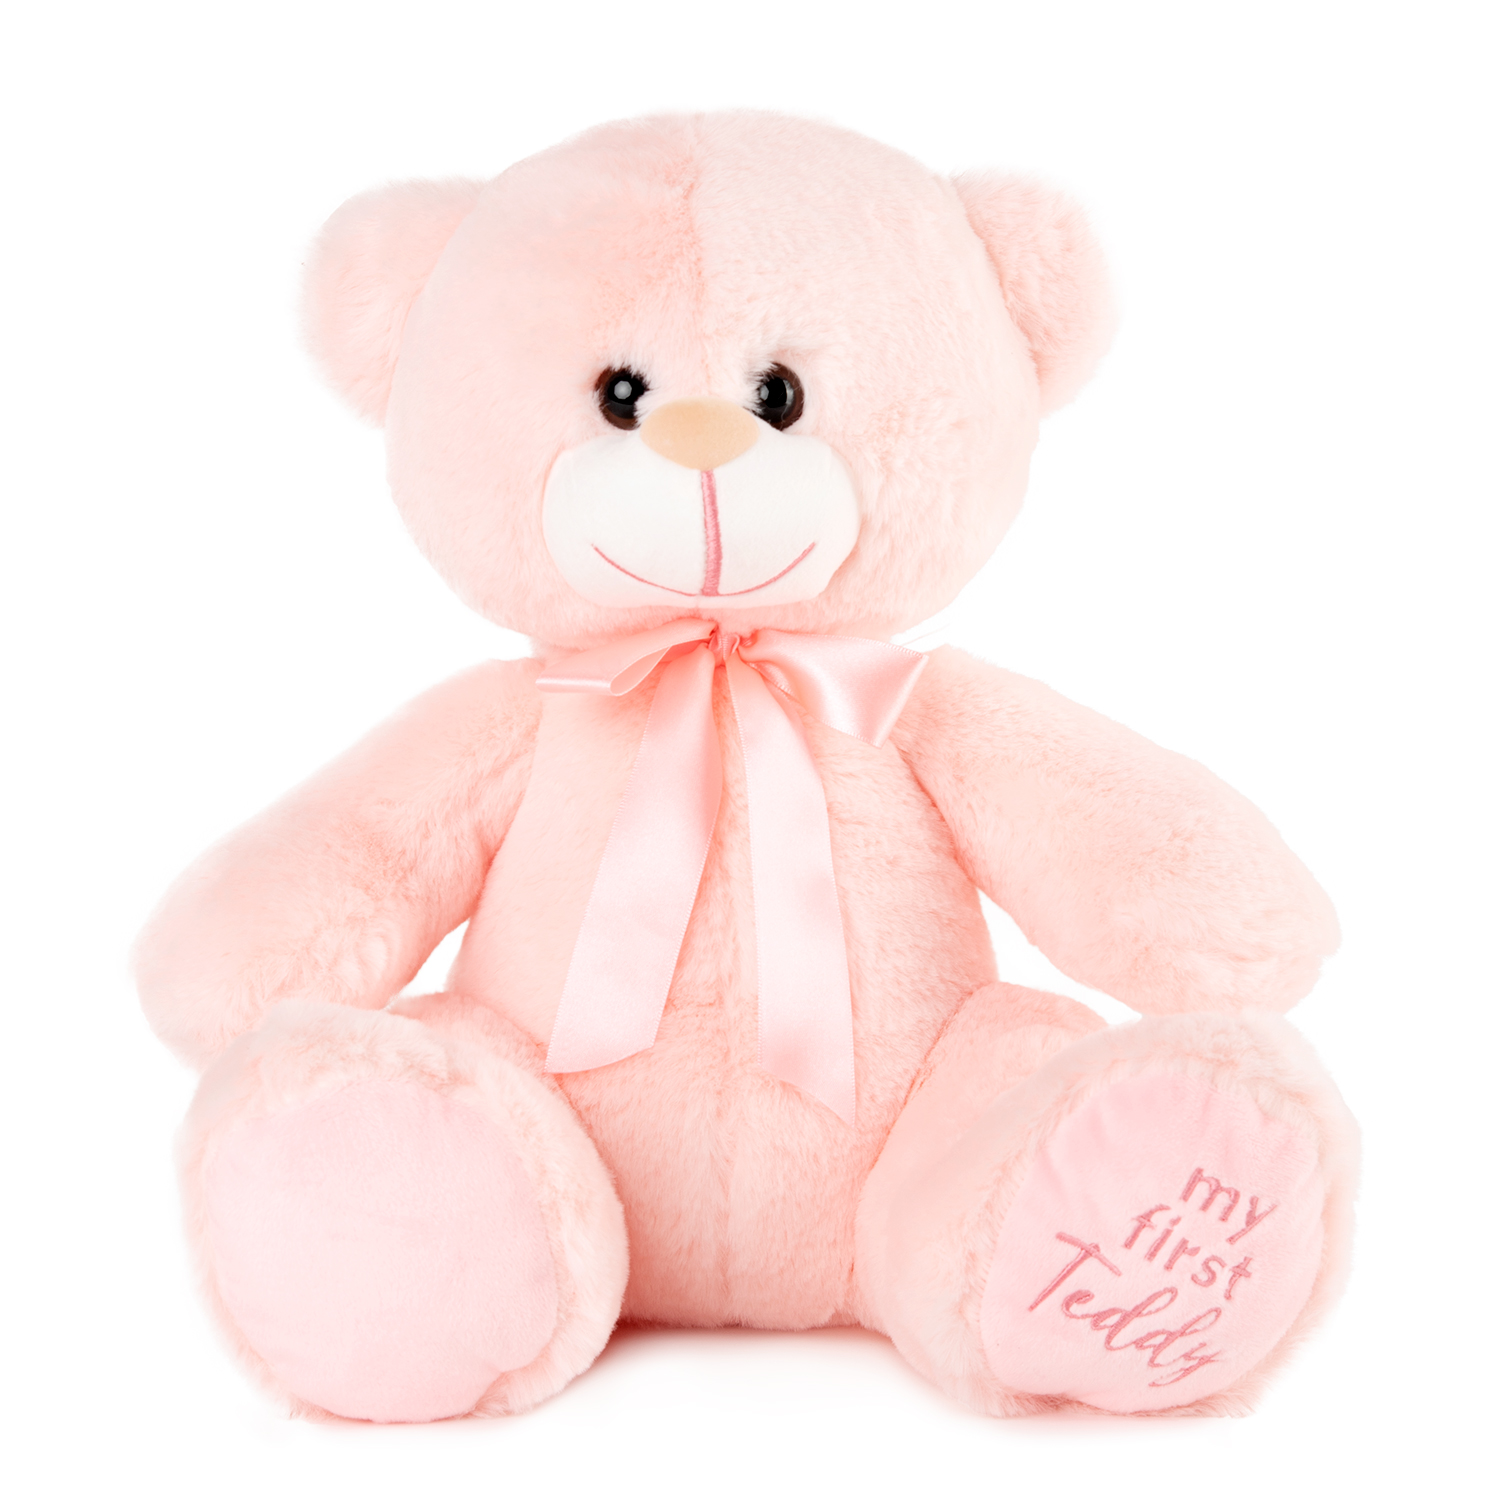 My first teddy bear - Pink